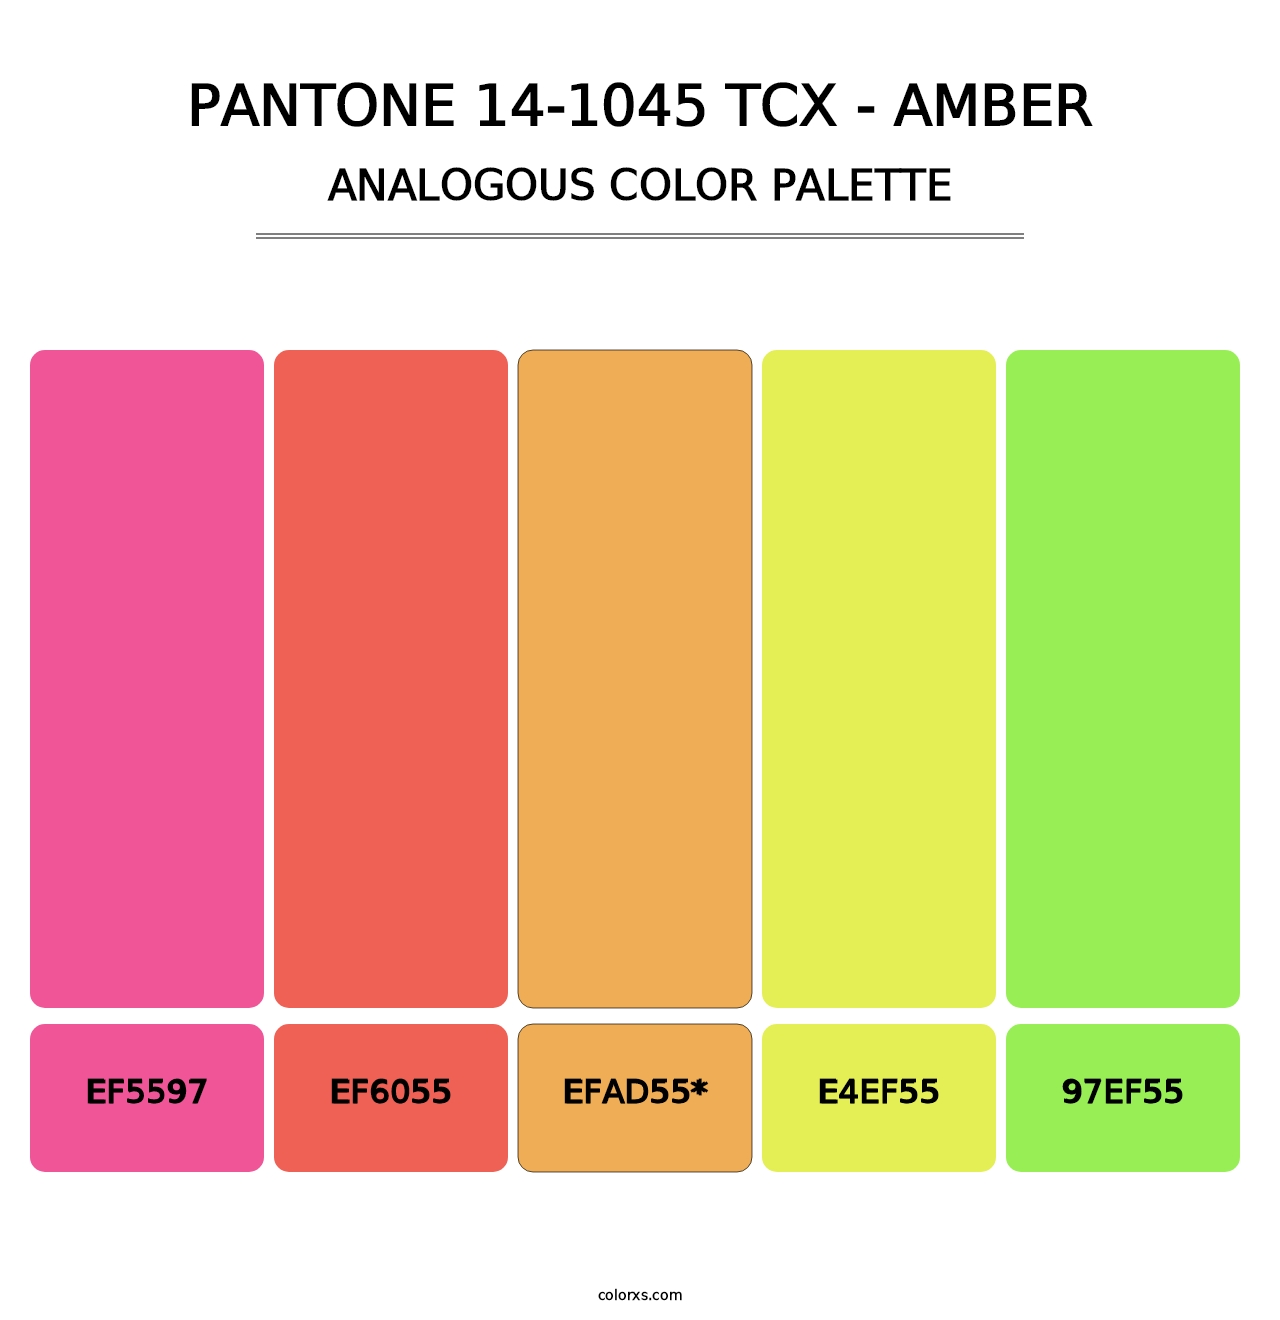 PANTONE 14-1045 TCX - Amber - Analogous Color Palette